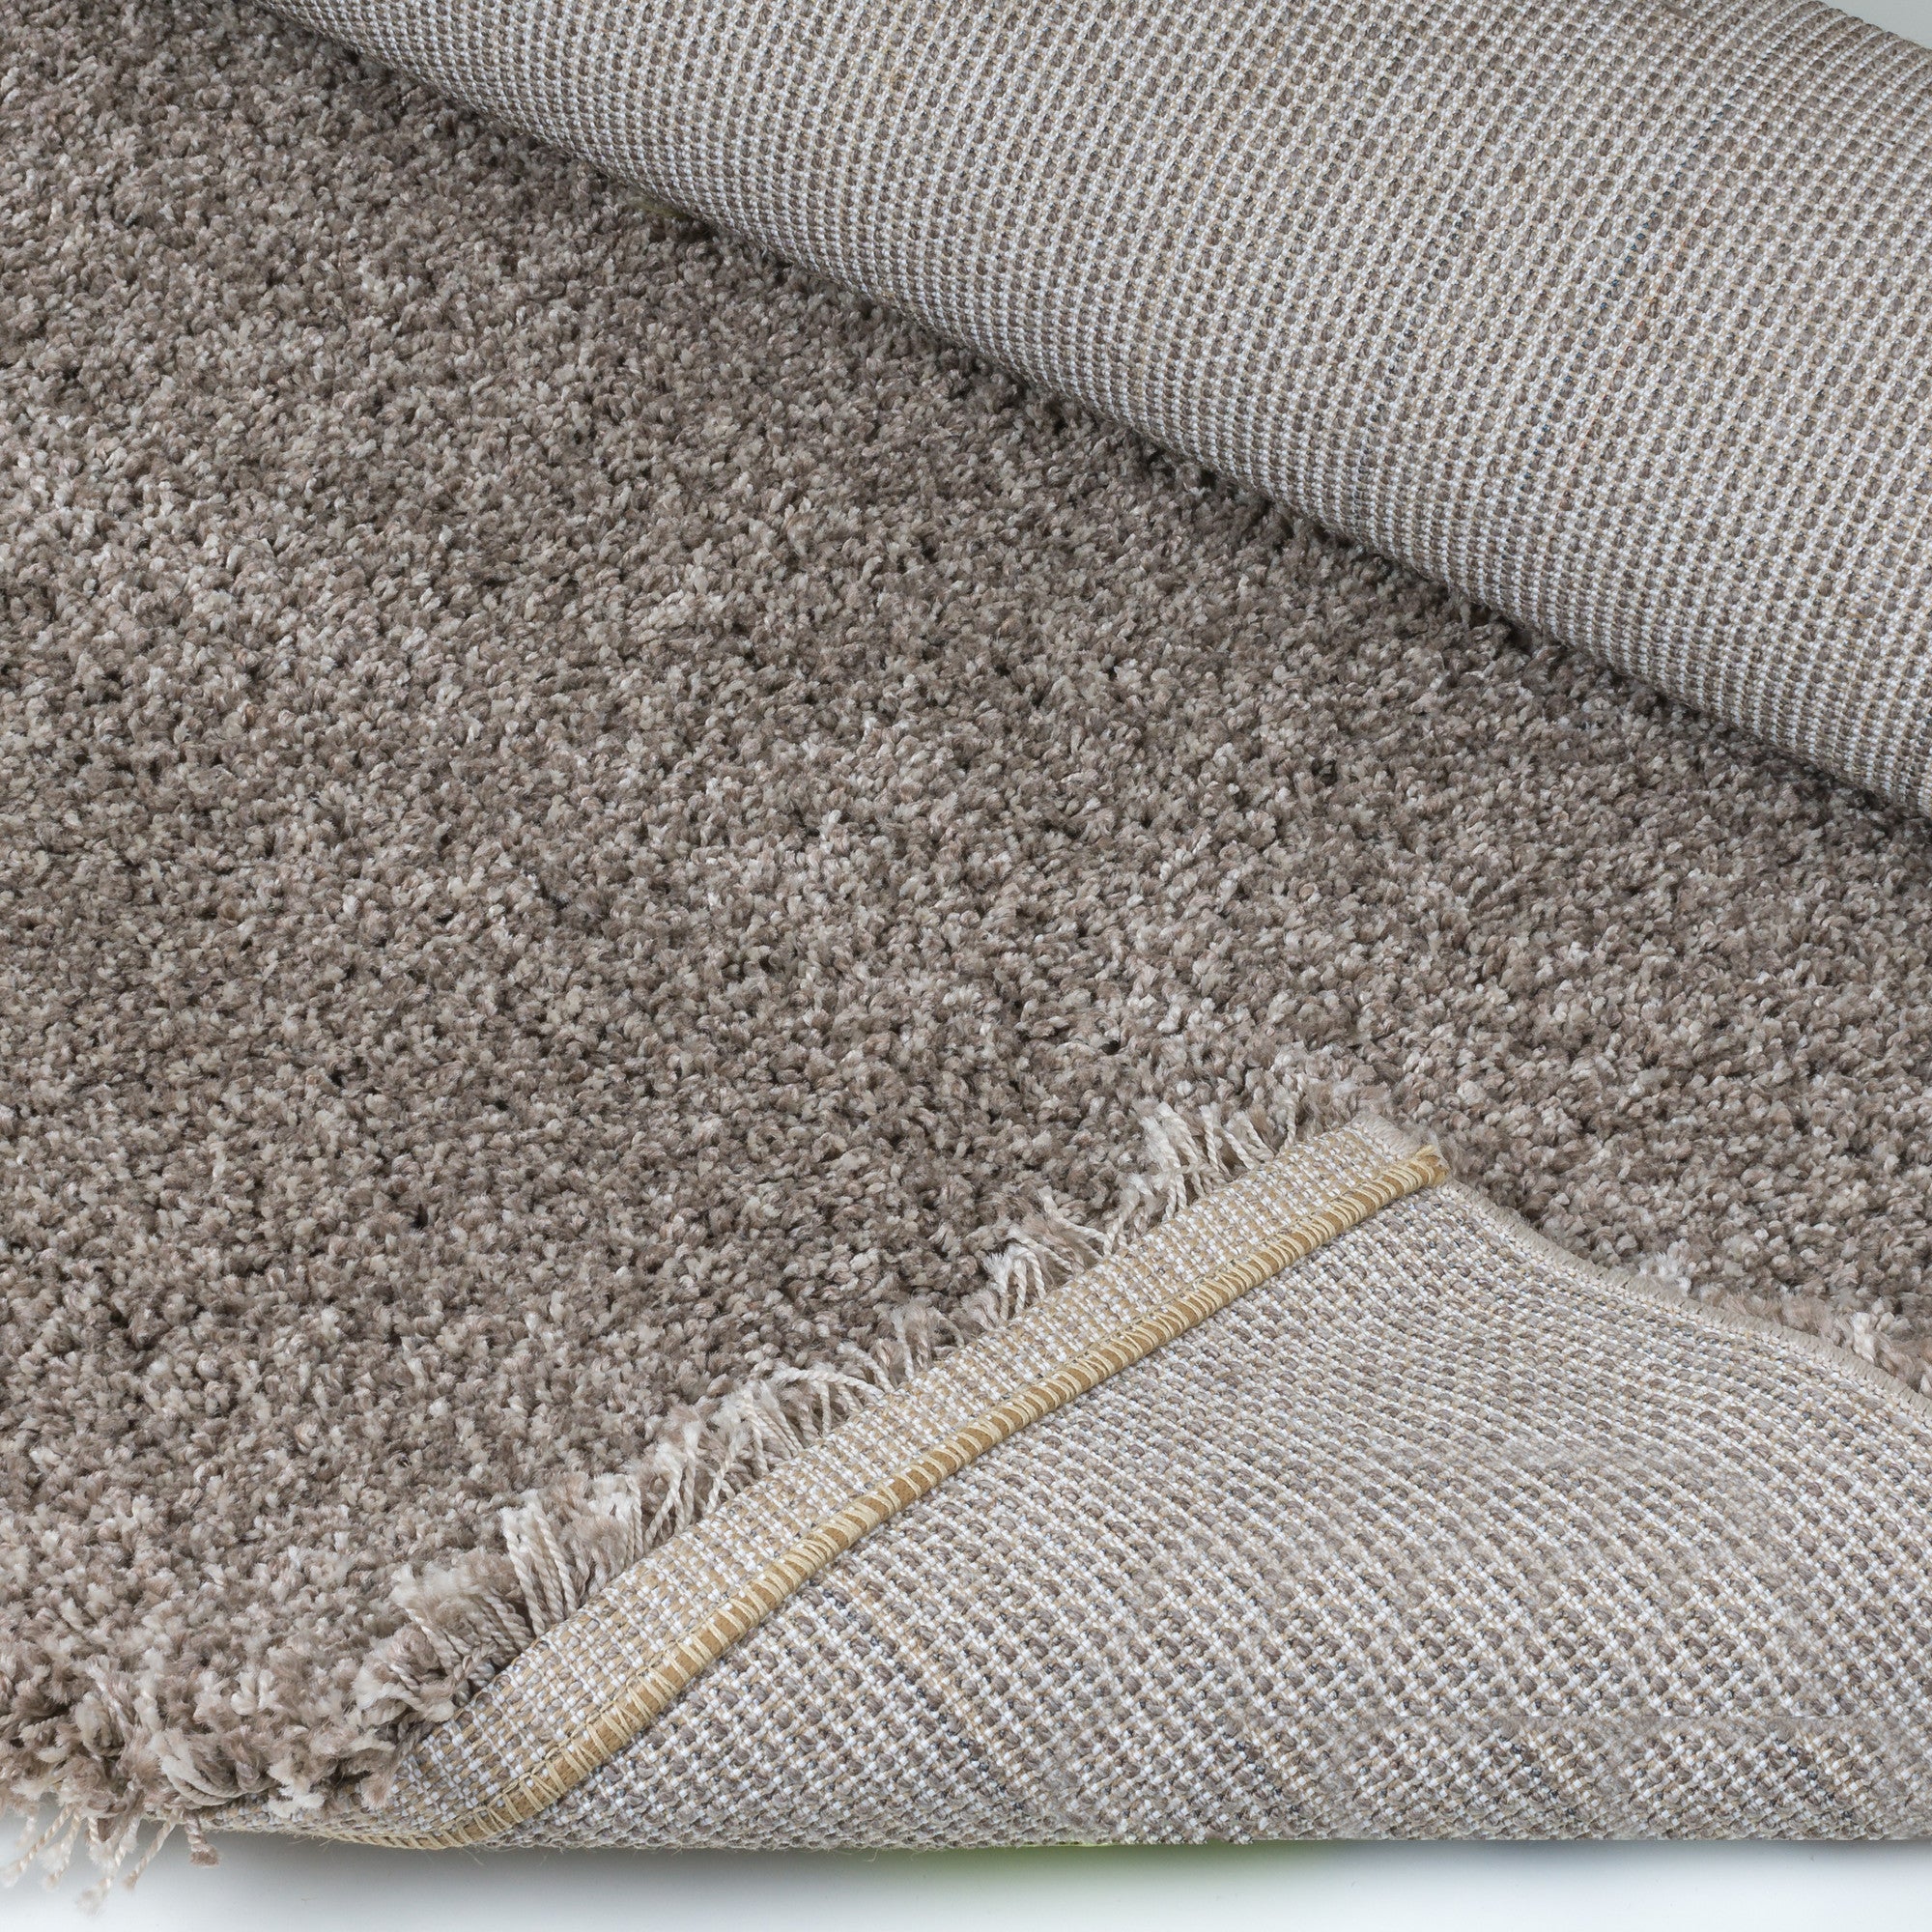 Carpet Rome Sand 160 x 230 cm